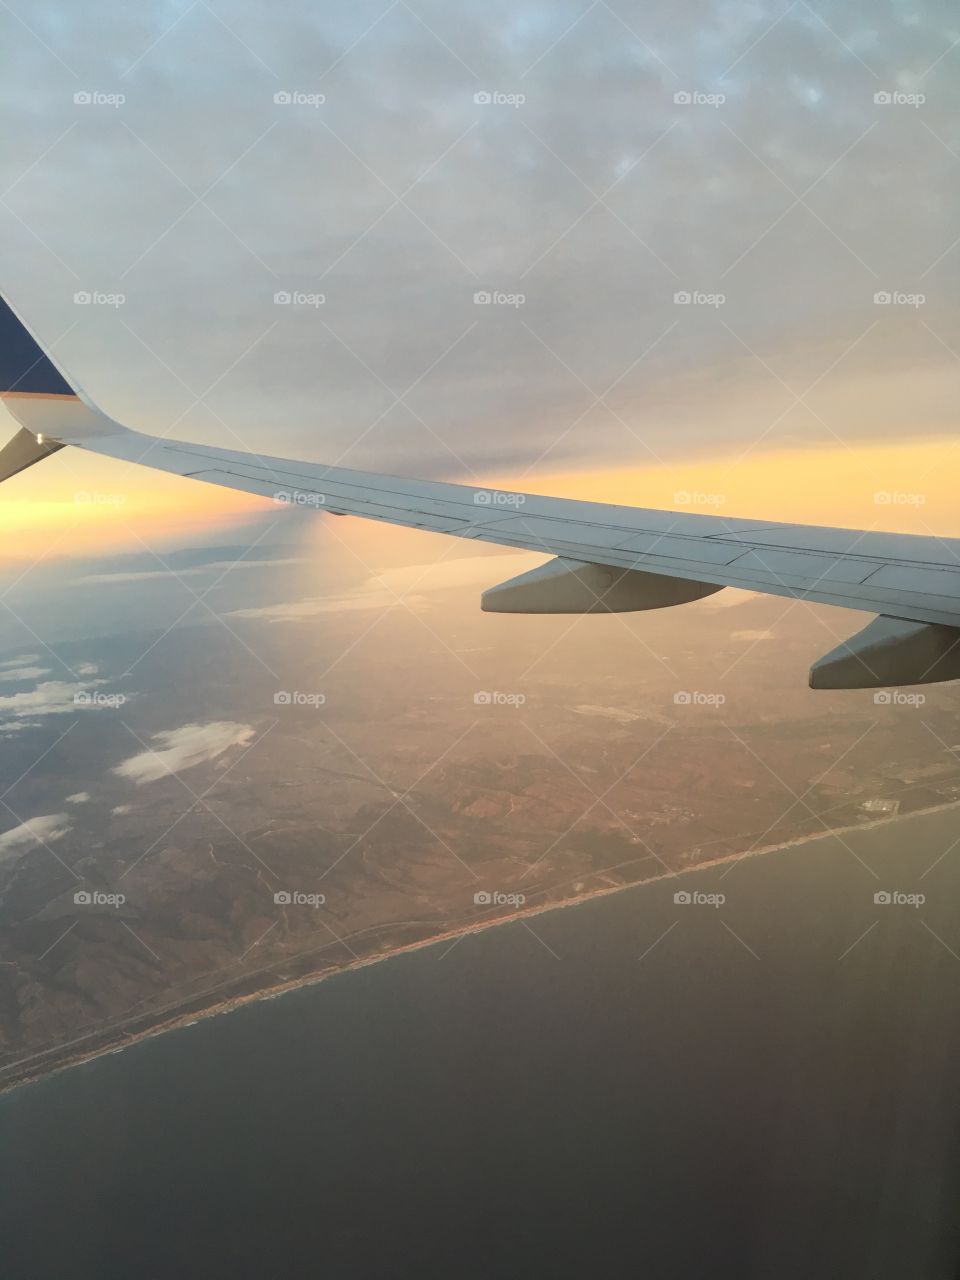 sunset on the pacific coast
CA USA